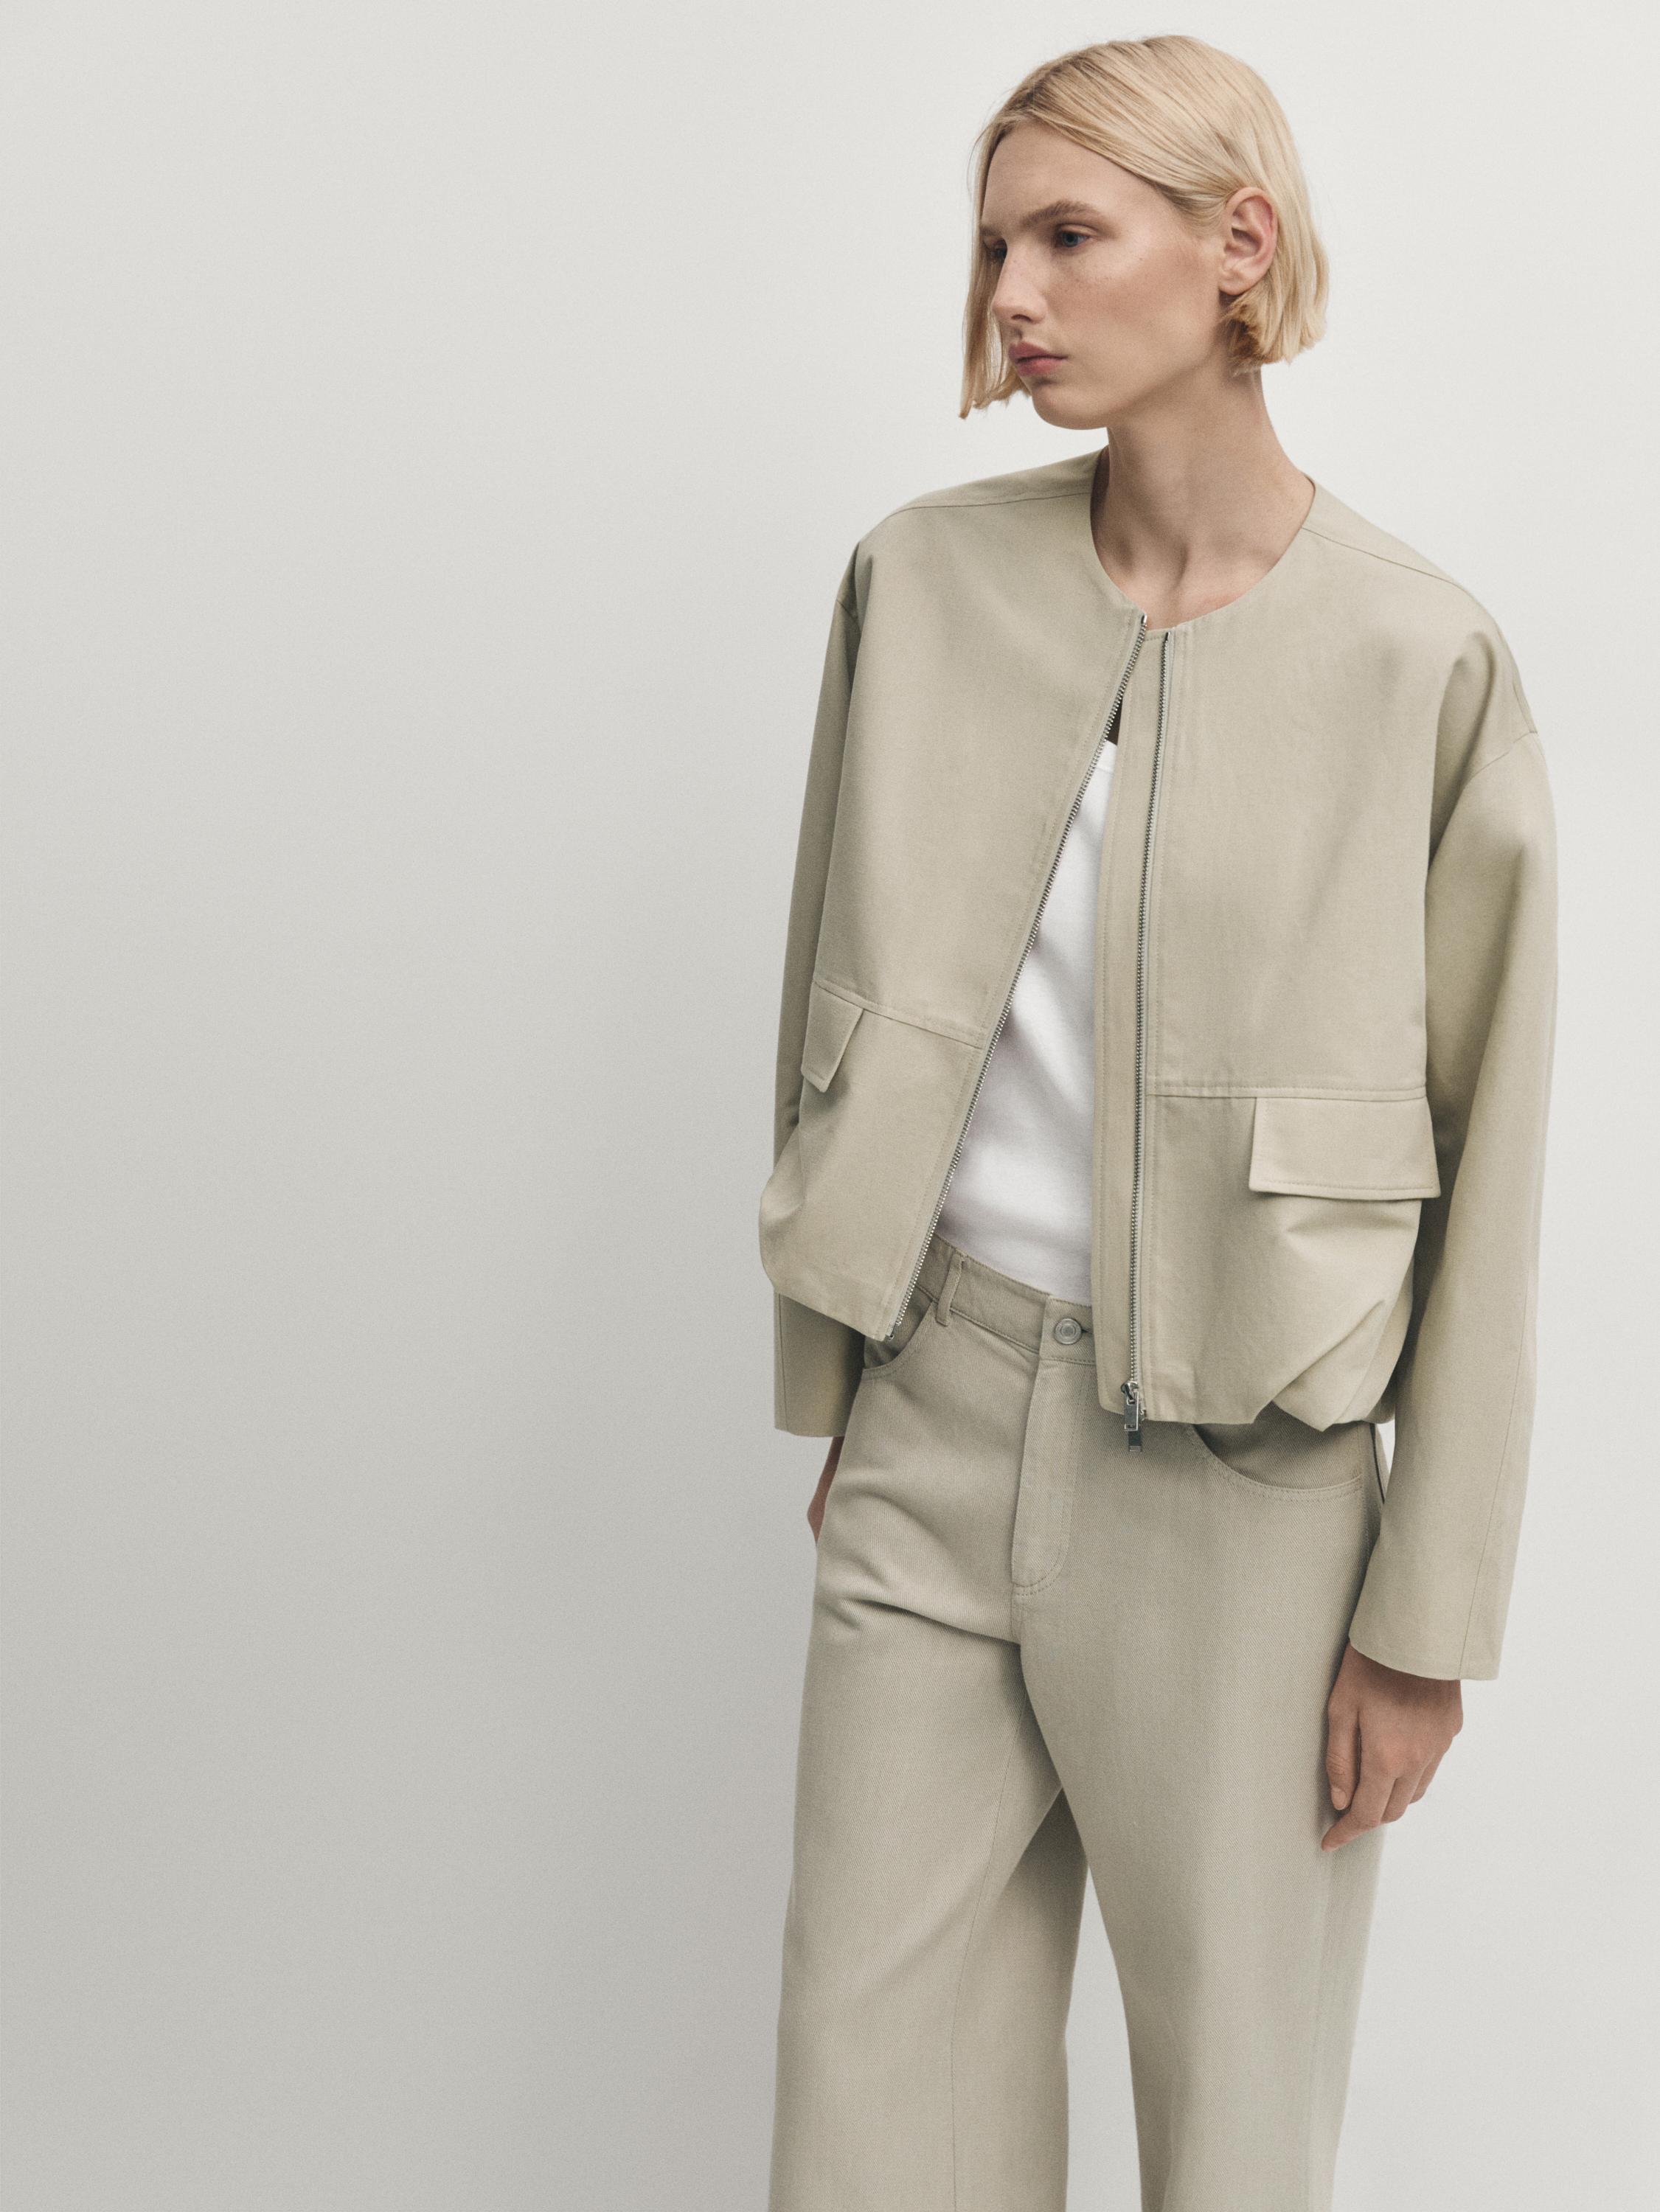 Bomber jacket with zip and pockets - Light beige | ZARA United States